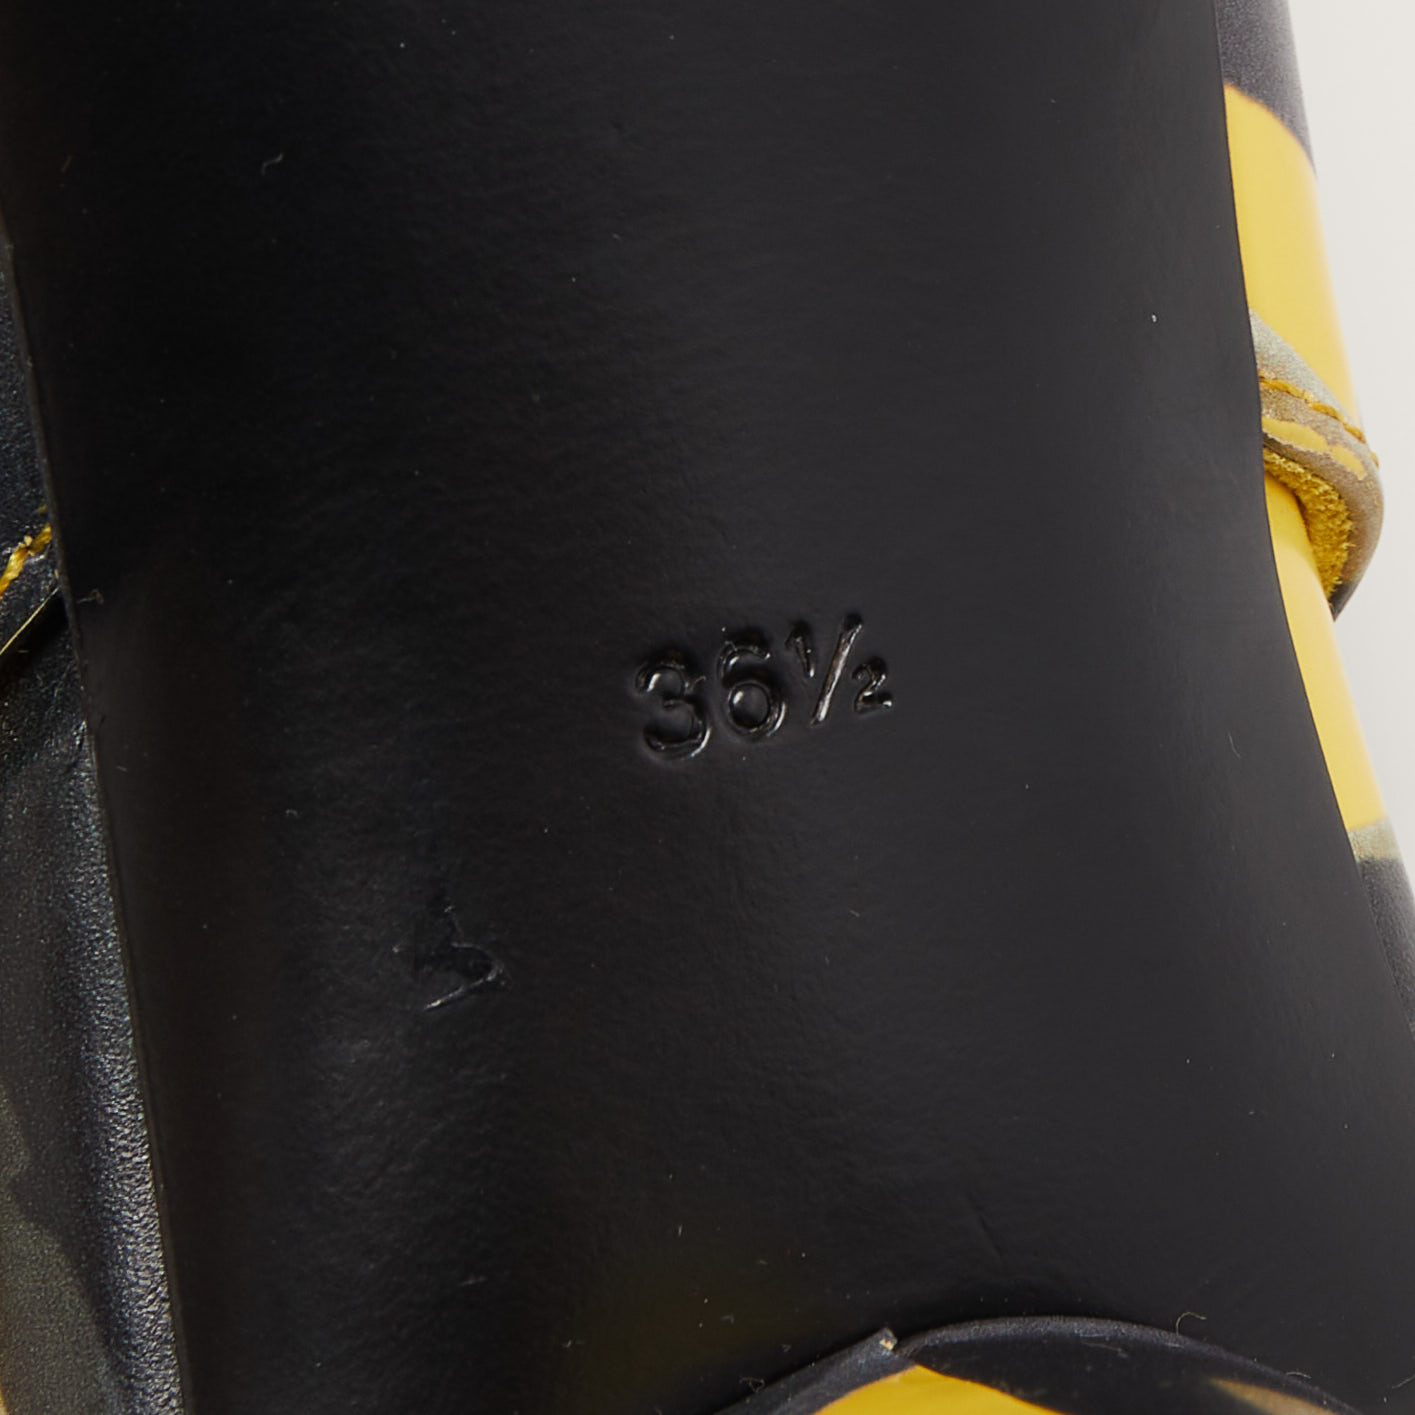 Burberry Yellow/Black Printed Leather Morson Slingback Pumps Size 36.5